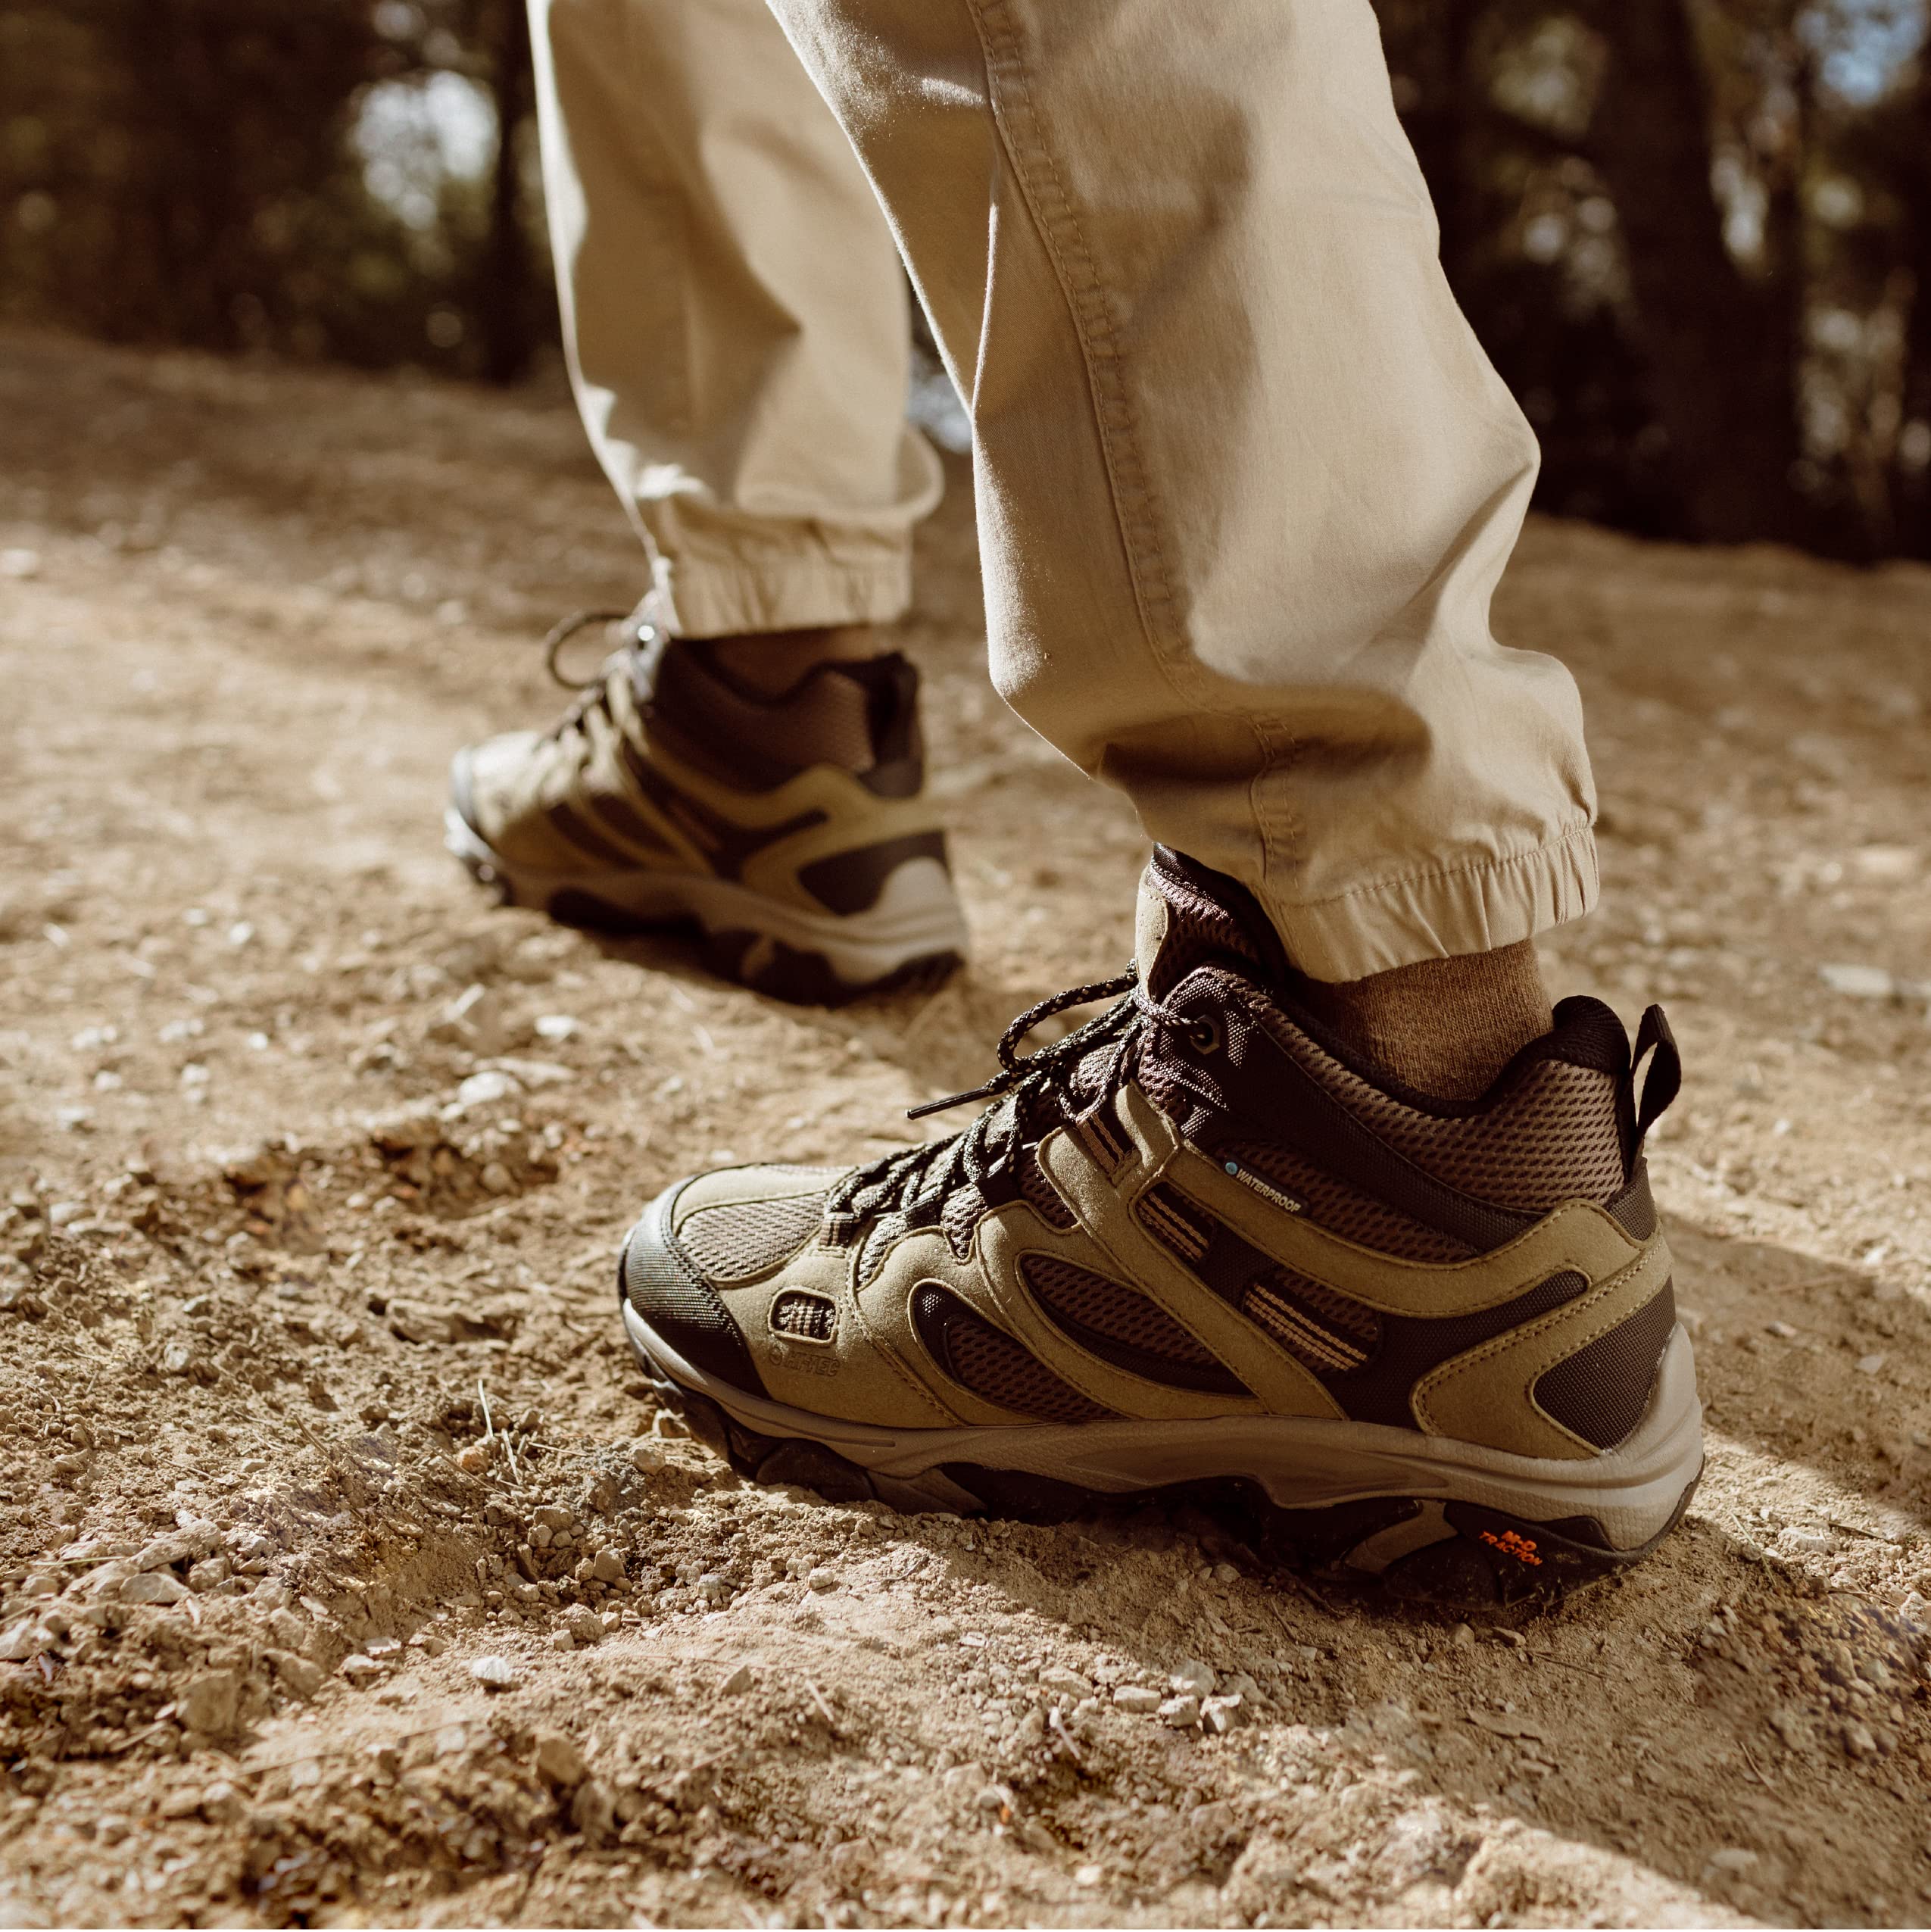 HI-TEC Ravus WP Mid Waterproof Hiking Boots for Men, Lightweight Breathable Outdoor Trekking Shoes